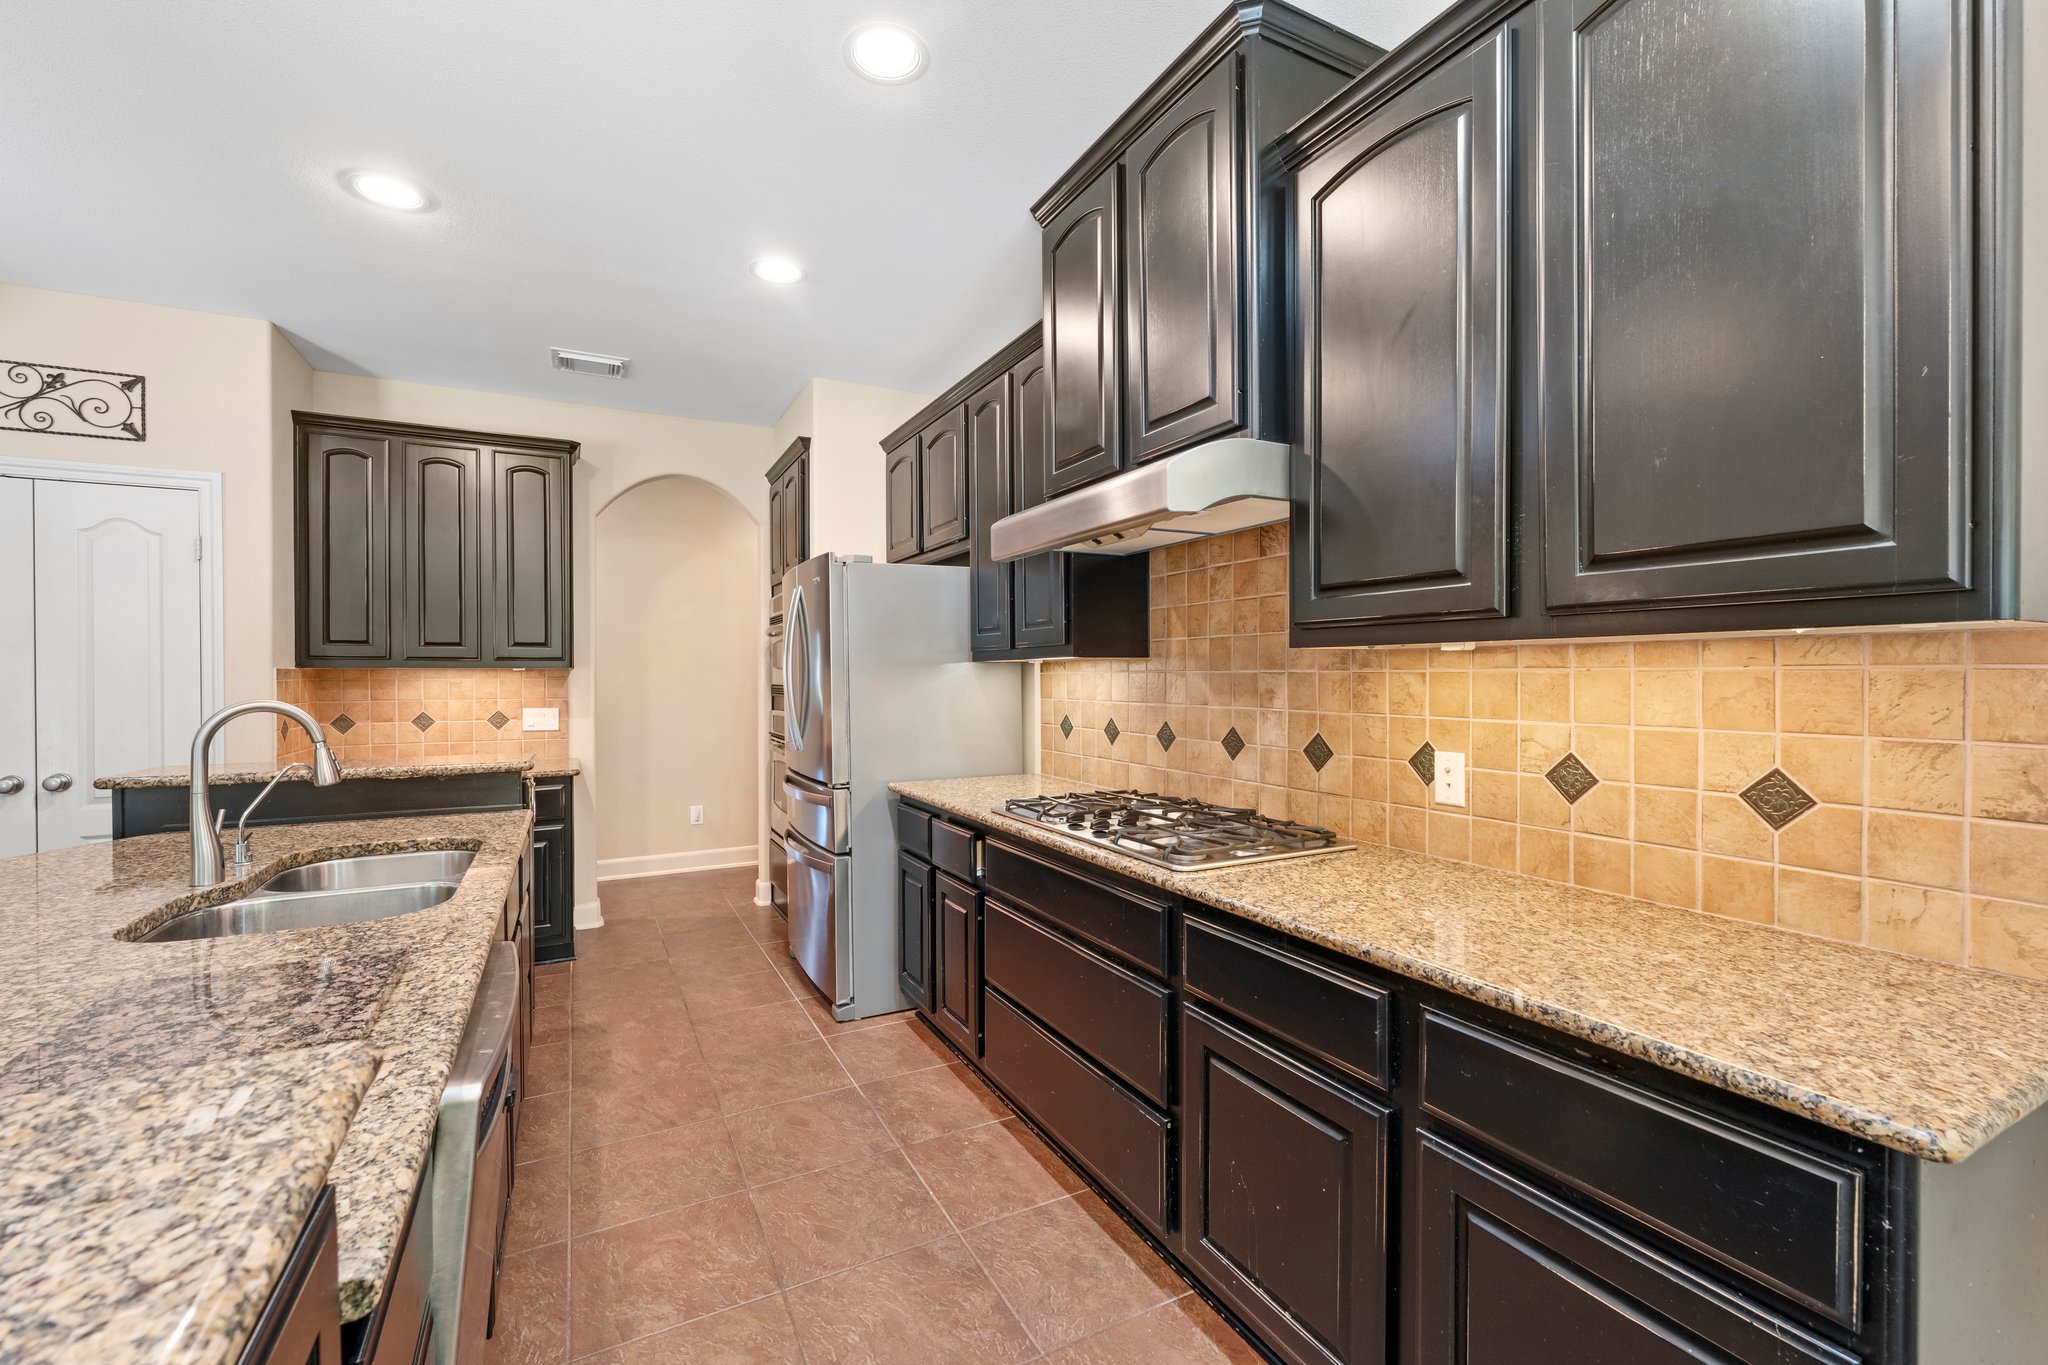 Kitchen has double door pantry, no-touch faucet, 5 burner gas cooktop.